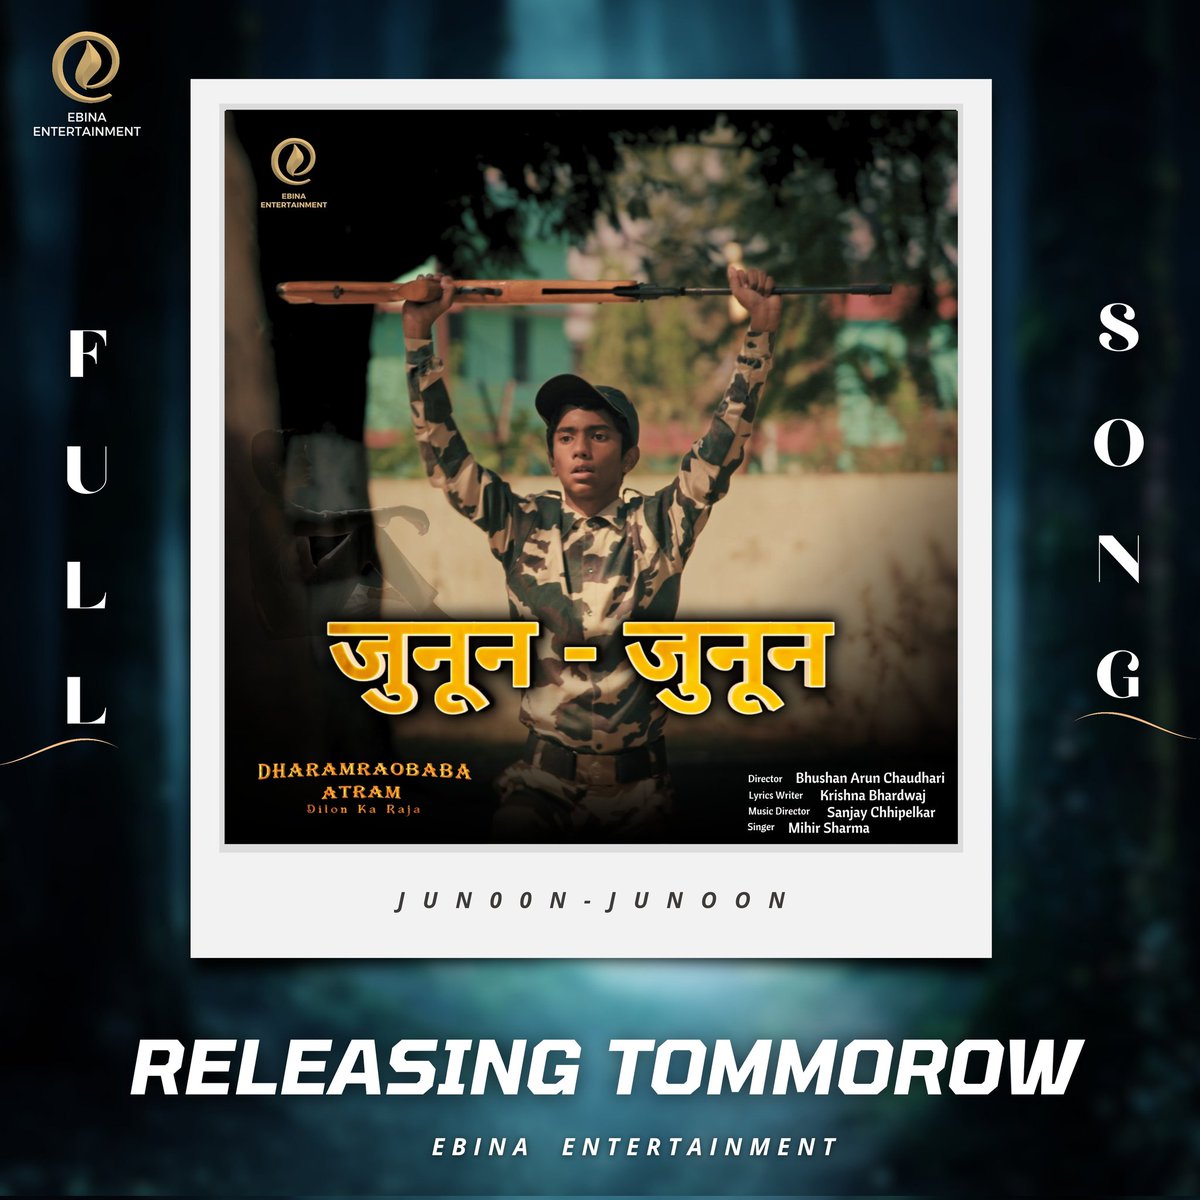 Junoon - Junoon  Full Song  
Tomorrow

#dharamraobabaatram #biopic #docudrama #political #ebinaentertainment #nitujoshi #bhushanarunchaudhari #ajitpawar #ncpmaharashtra #gadchiroli
@dharamraobabaatram @ebinaentertainment @nitujoshiofficial @The_Bhushan @jitesh_harishchandra